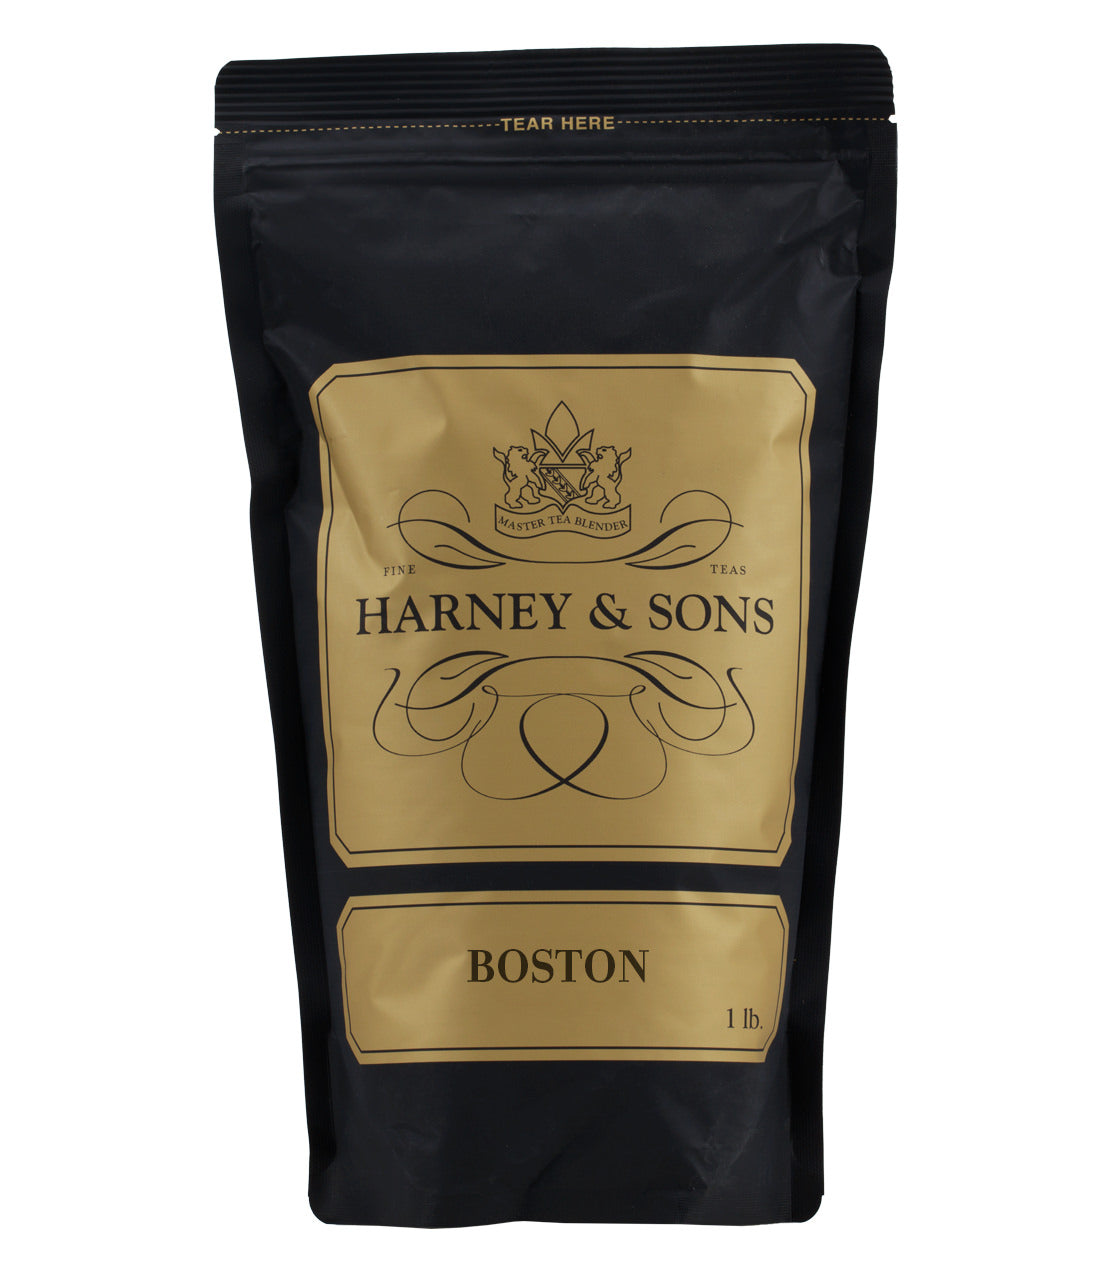 Boston - Loose 1 lb. Bag - Harney & Sons Fine Teas